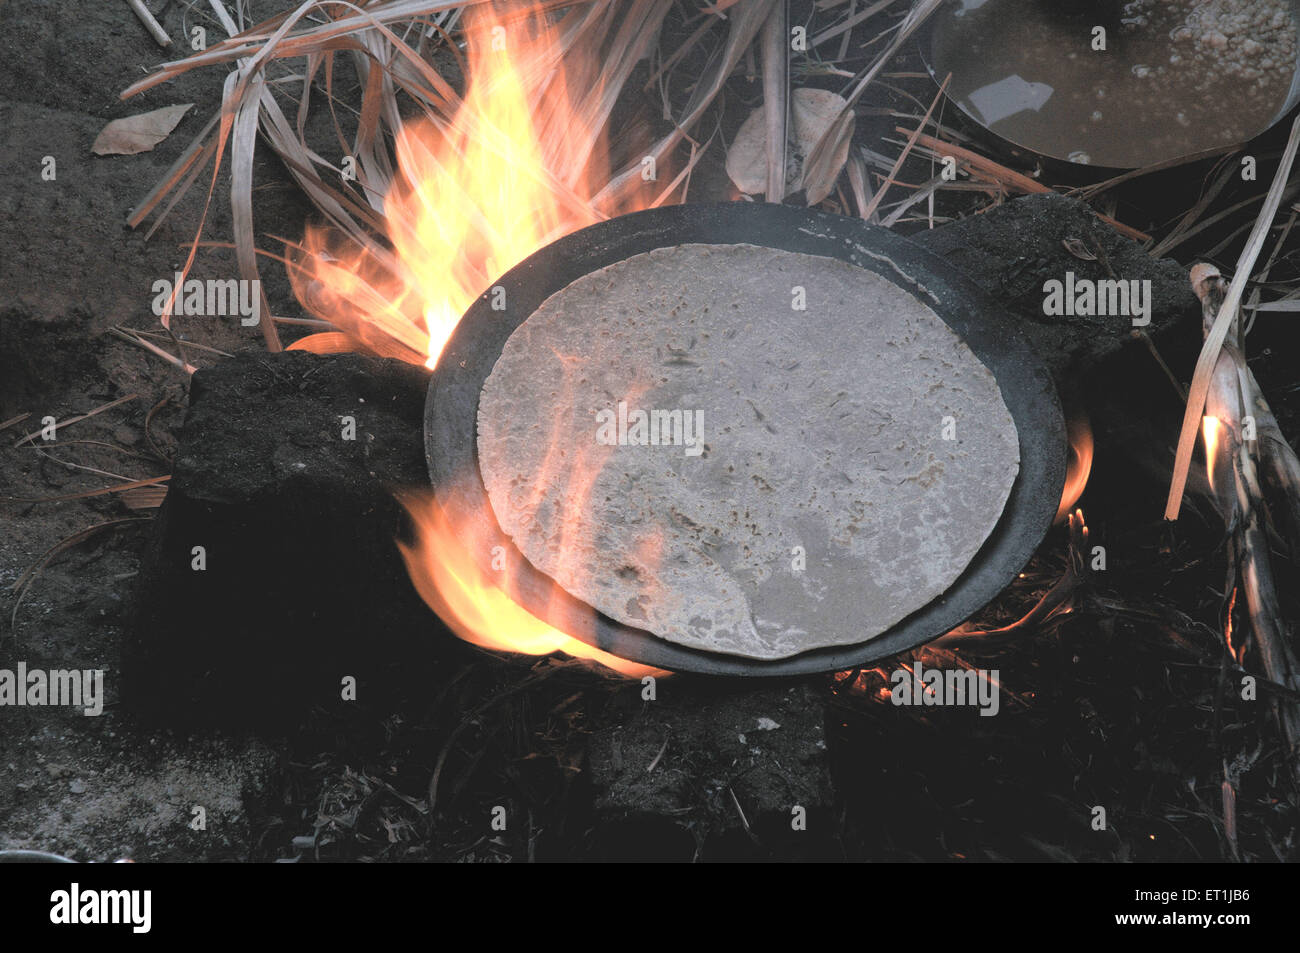 Roti making bread roasting cooking pan wood fired open village kitchen India Stock Photo